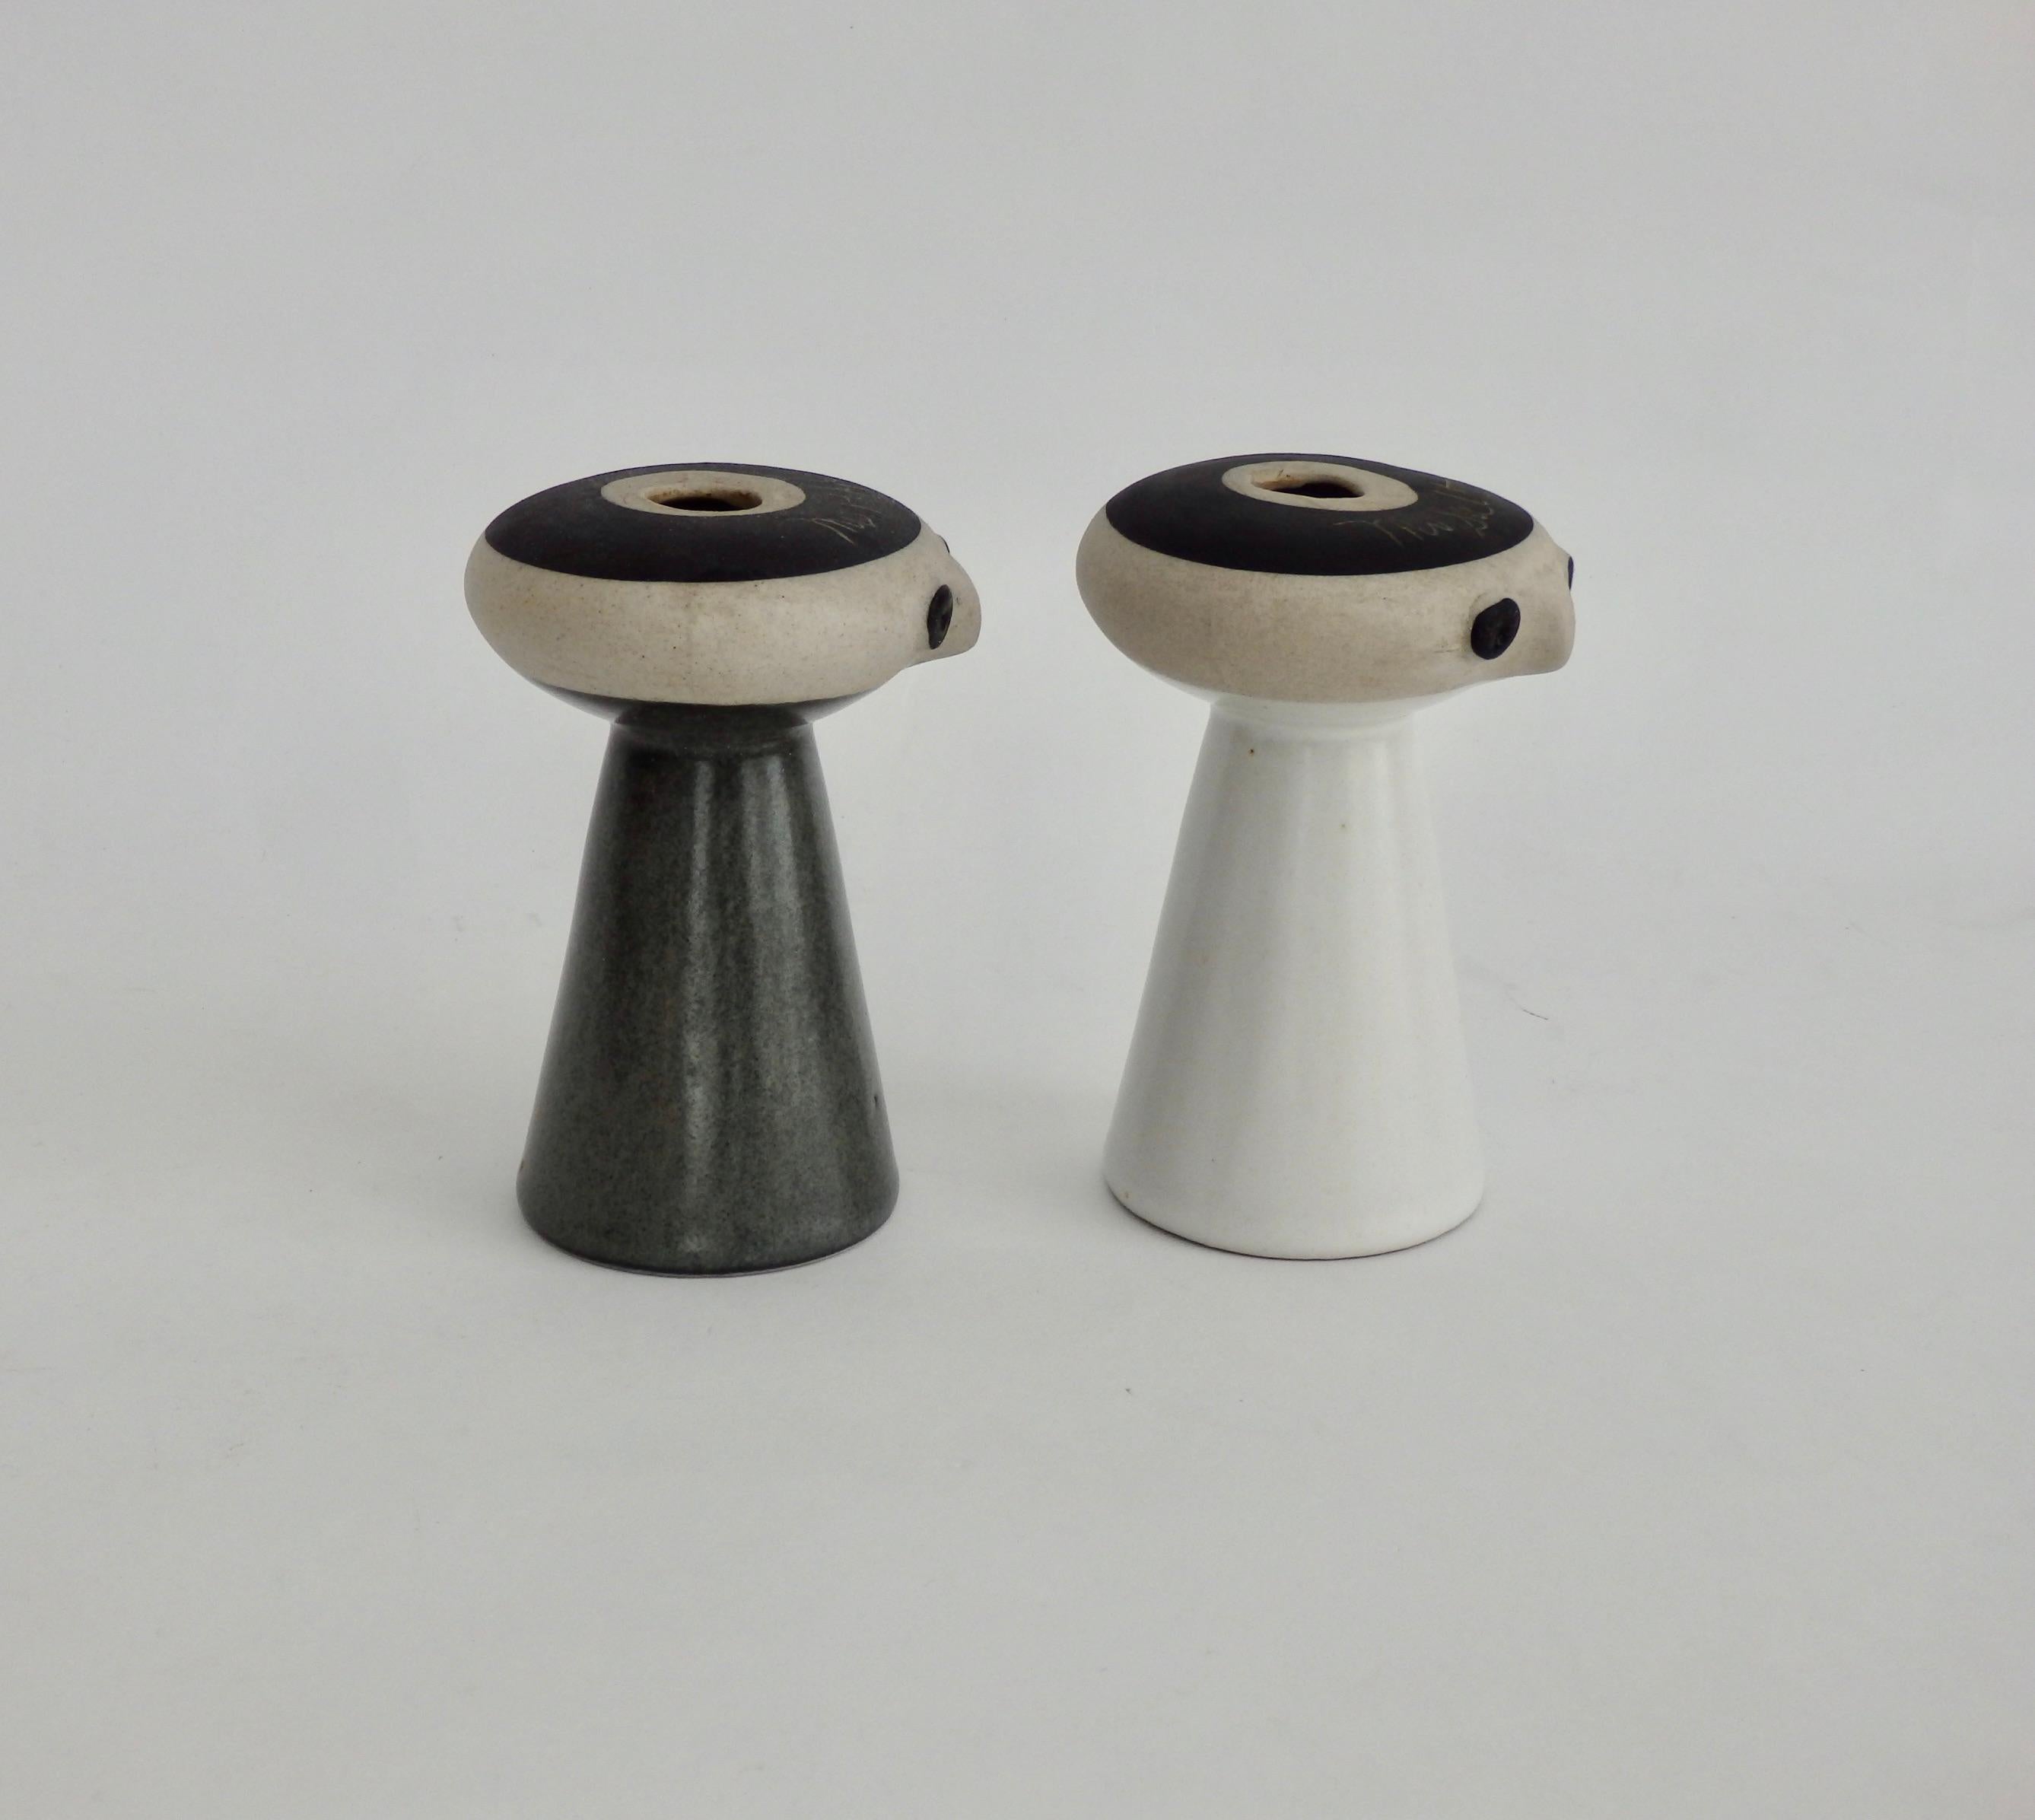 Mr and Mrs salt and pepper shakers. Designed by David Gill. Etched signature Coop Design Bennington Vt.